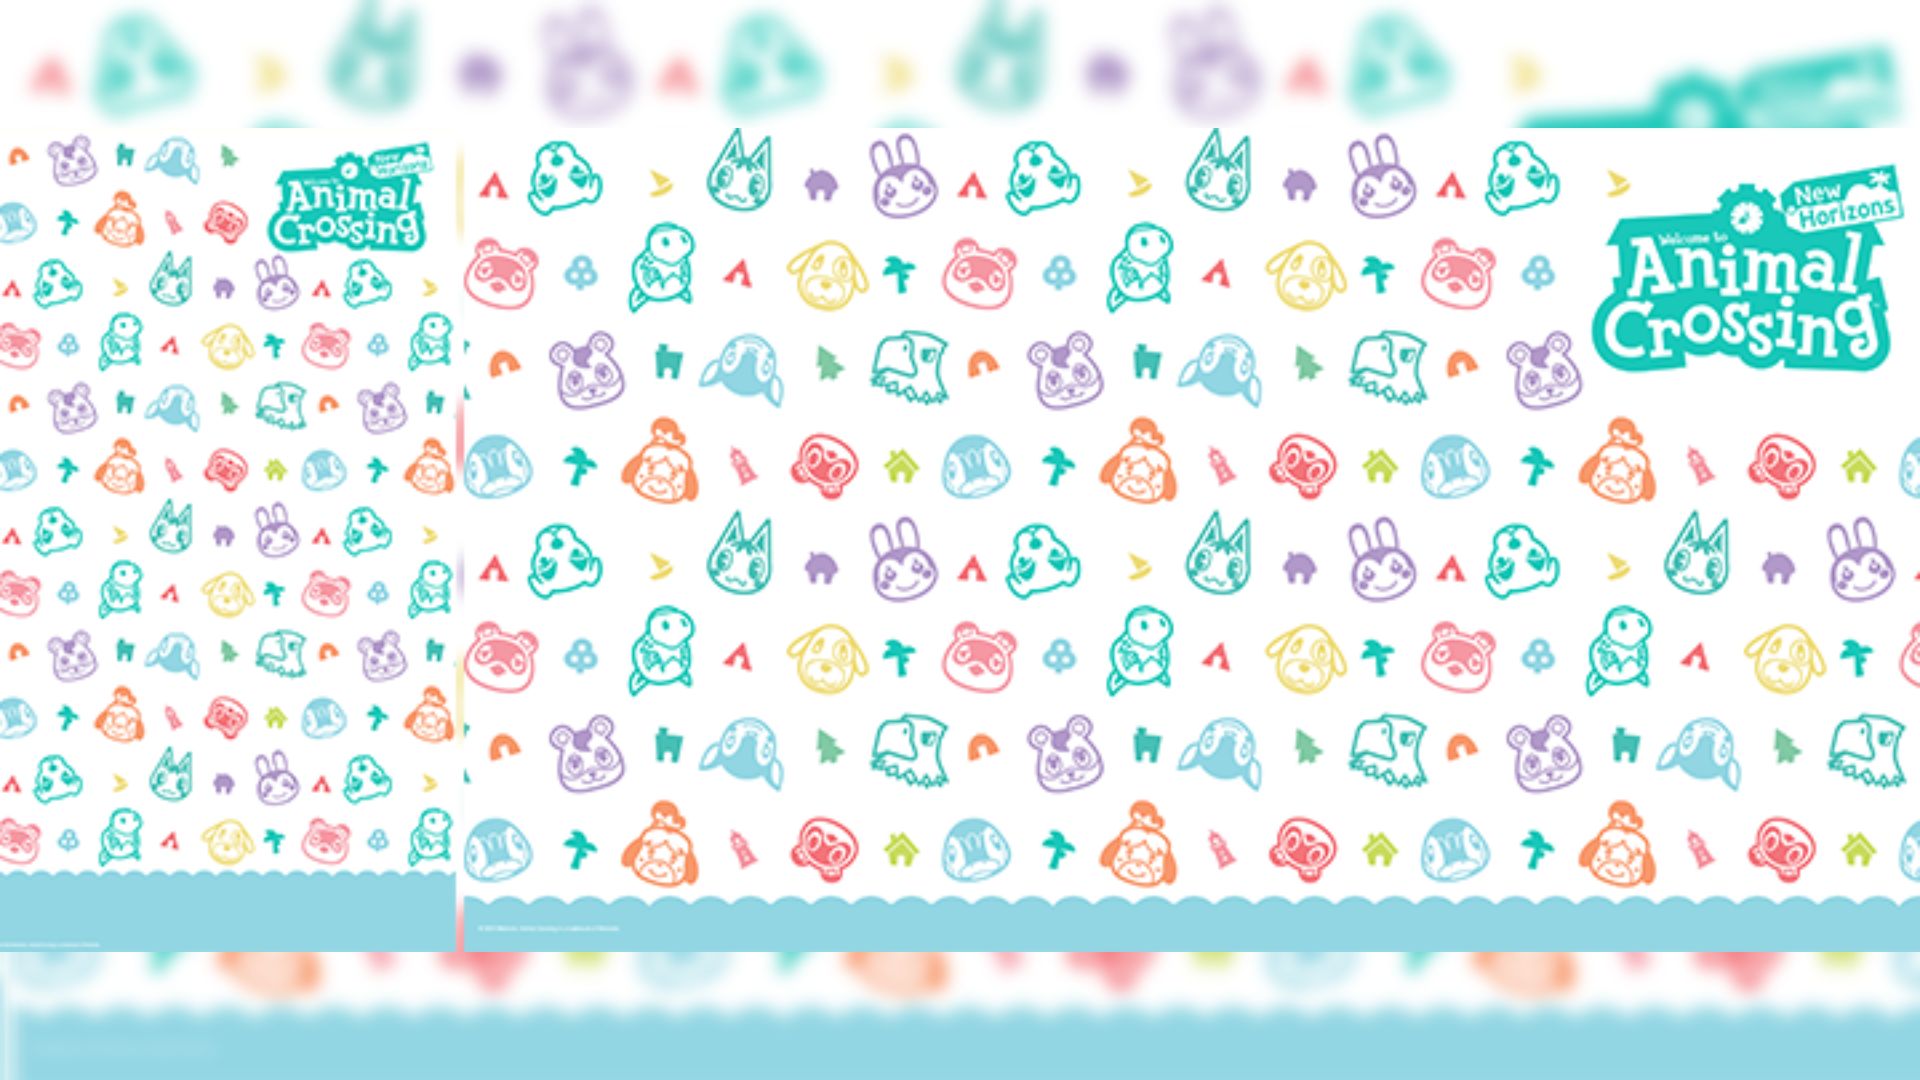 Animal Crossing wallpapers | Pocket Tactics